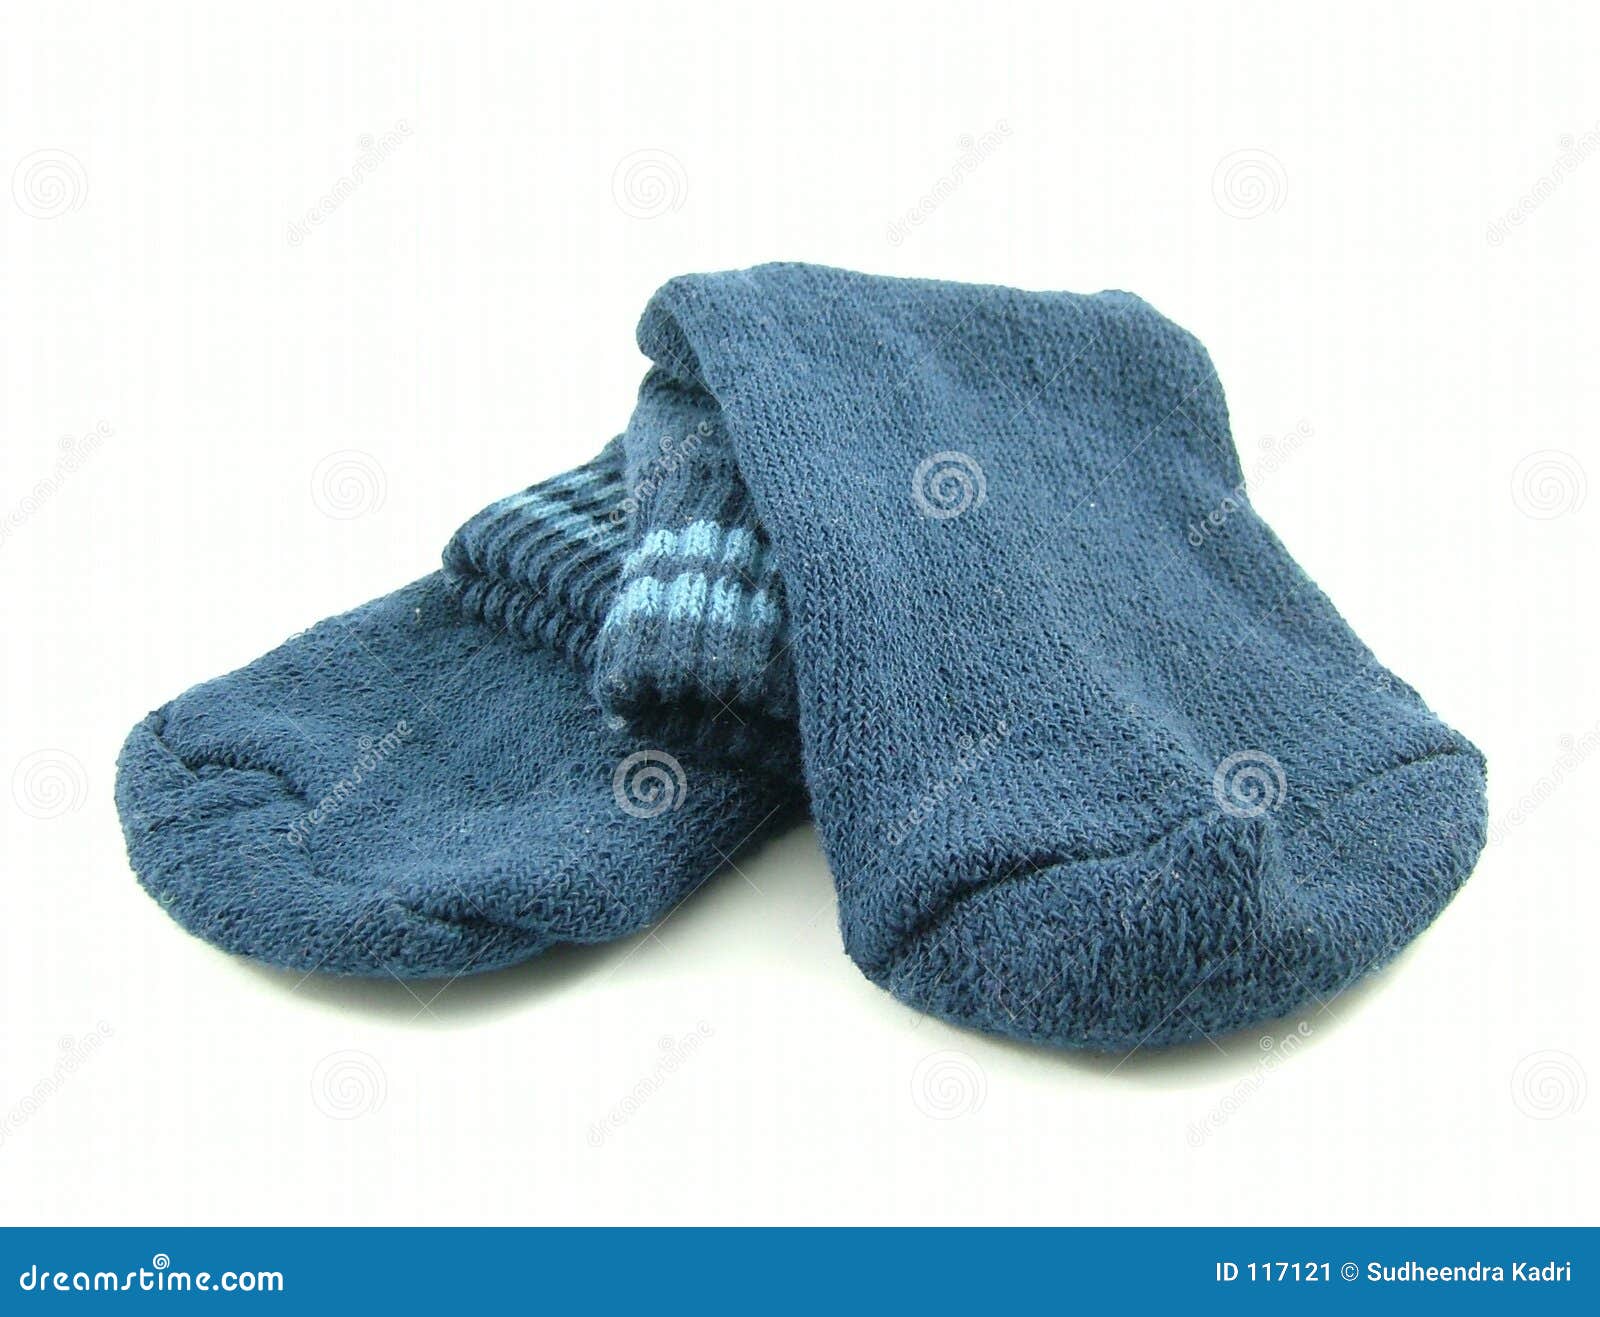 Folded pair stock image. Image of dark, protect, sock, foot - 117121